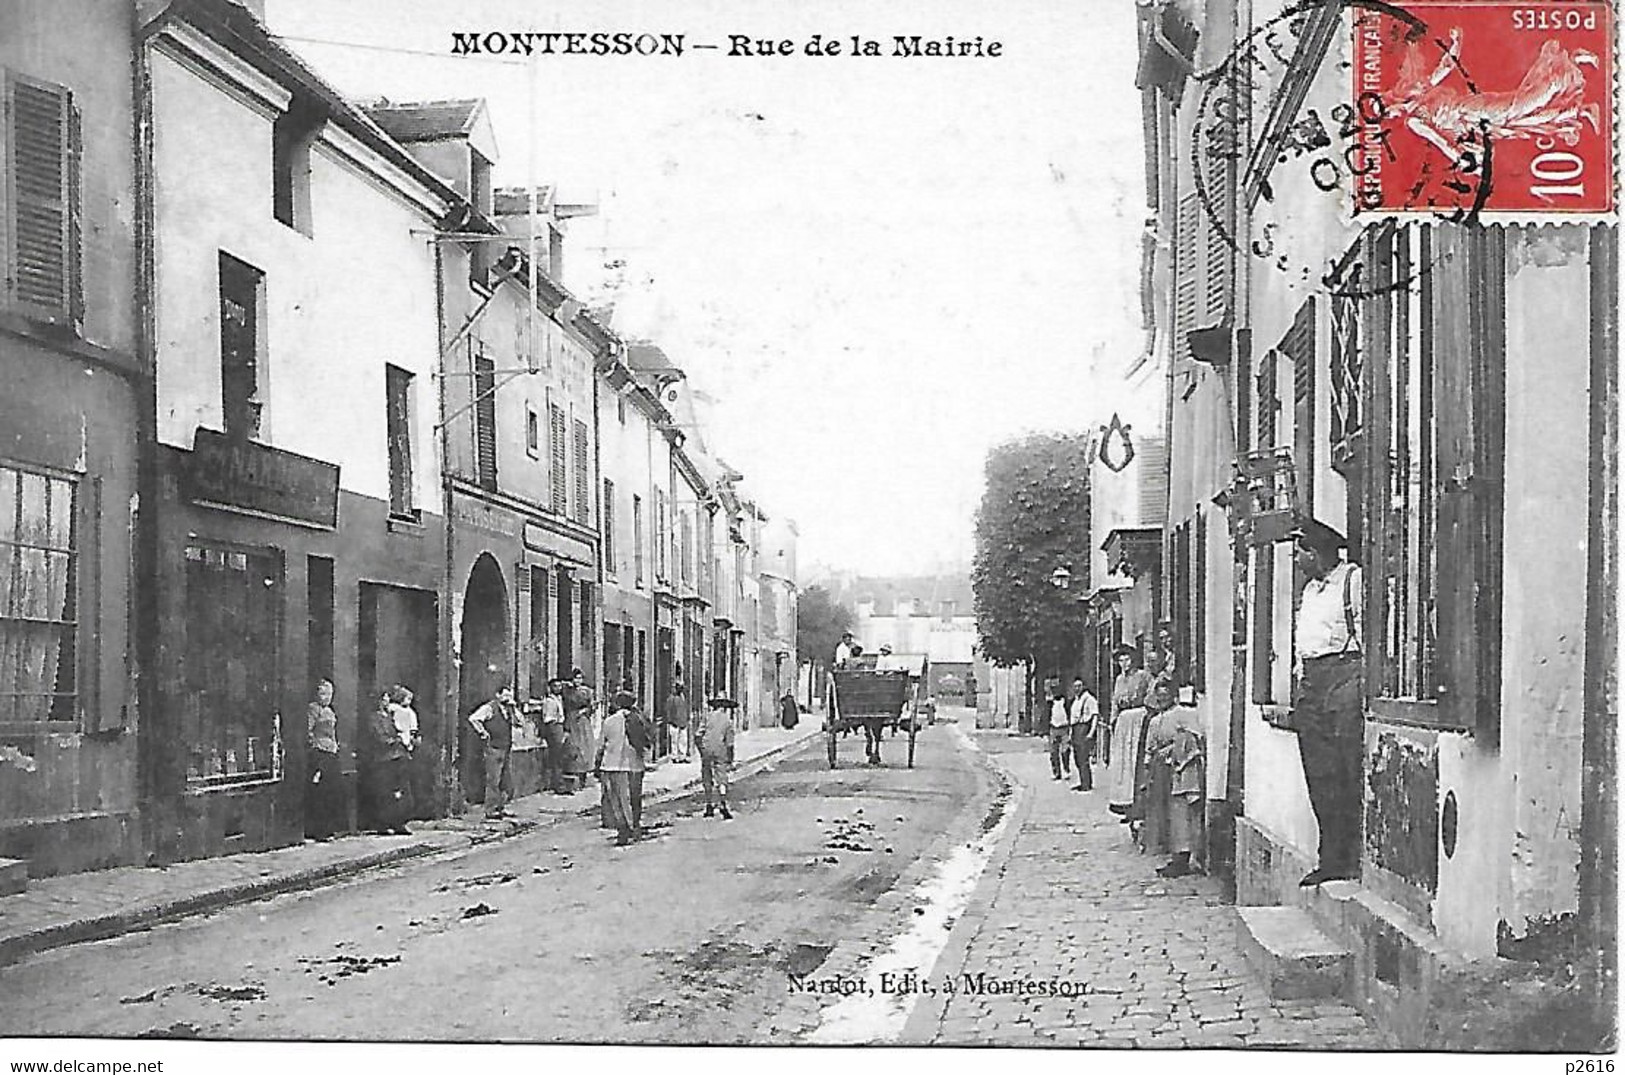 MONTESSON -  1908 -  RUE DE LA MAIRIE - NARDOT EDITEUR A MONTESSON - Montesson